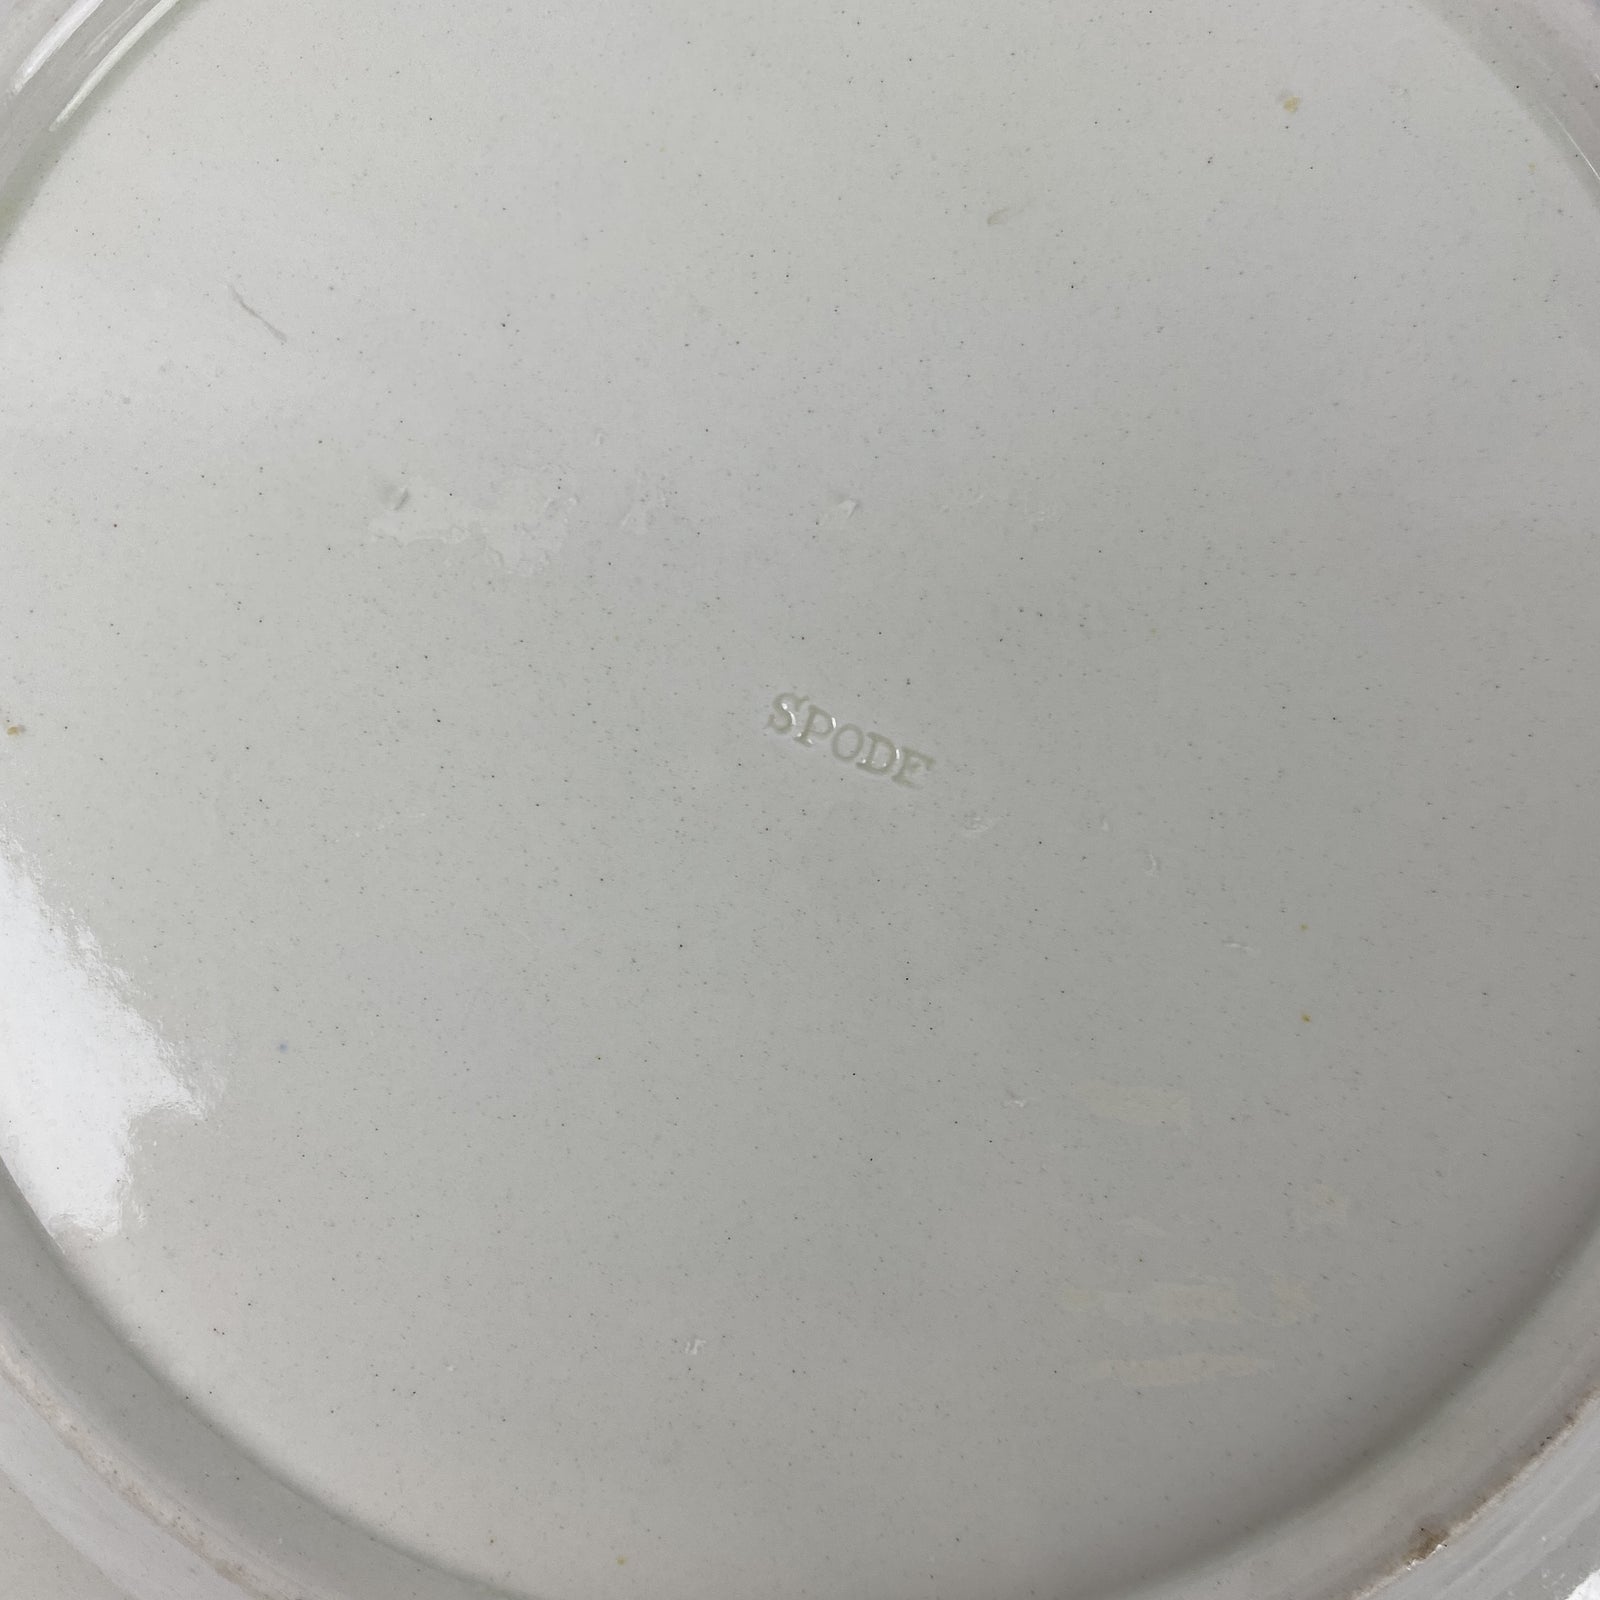 Spode English Hand-Painted Creamware Plate